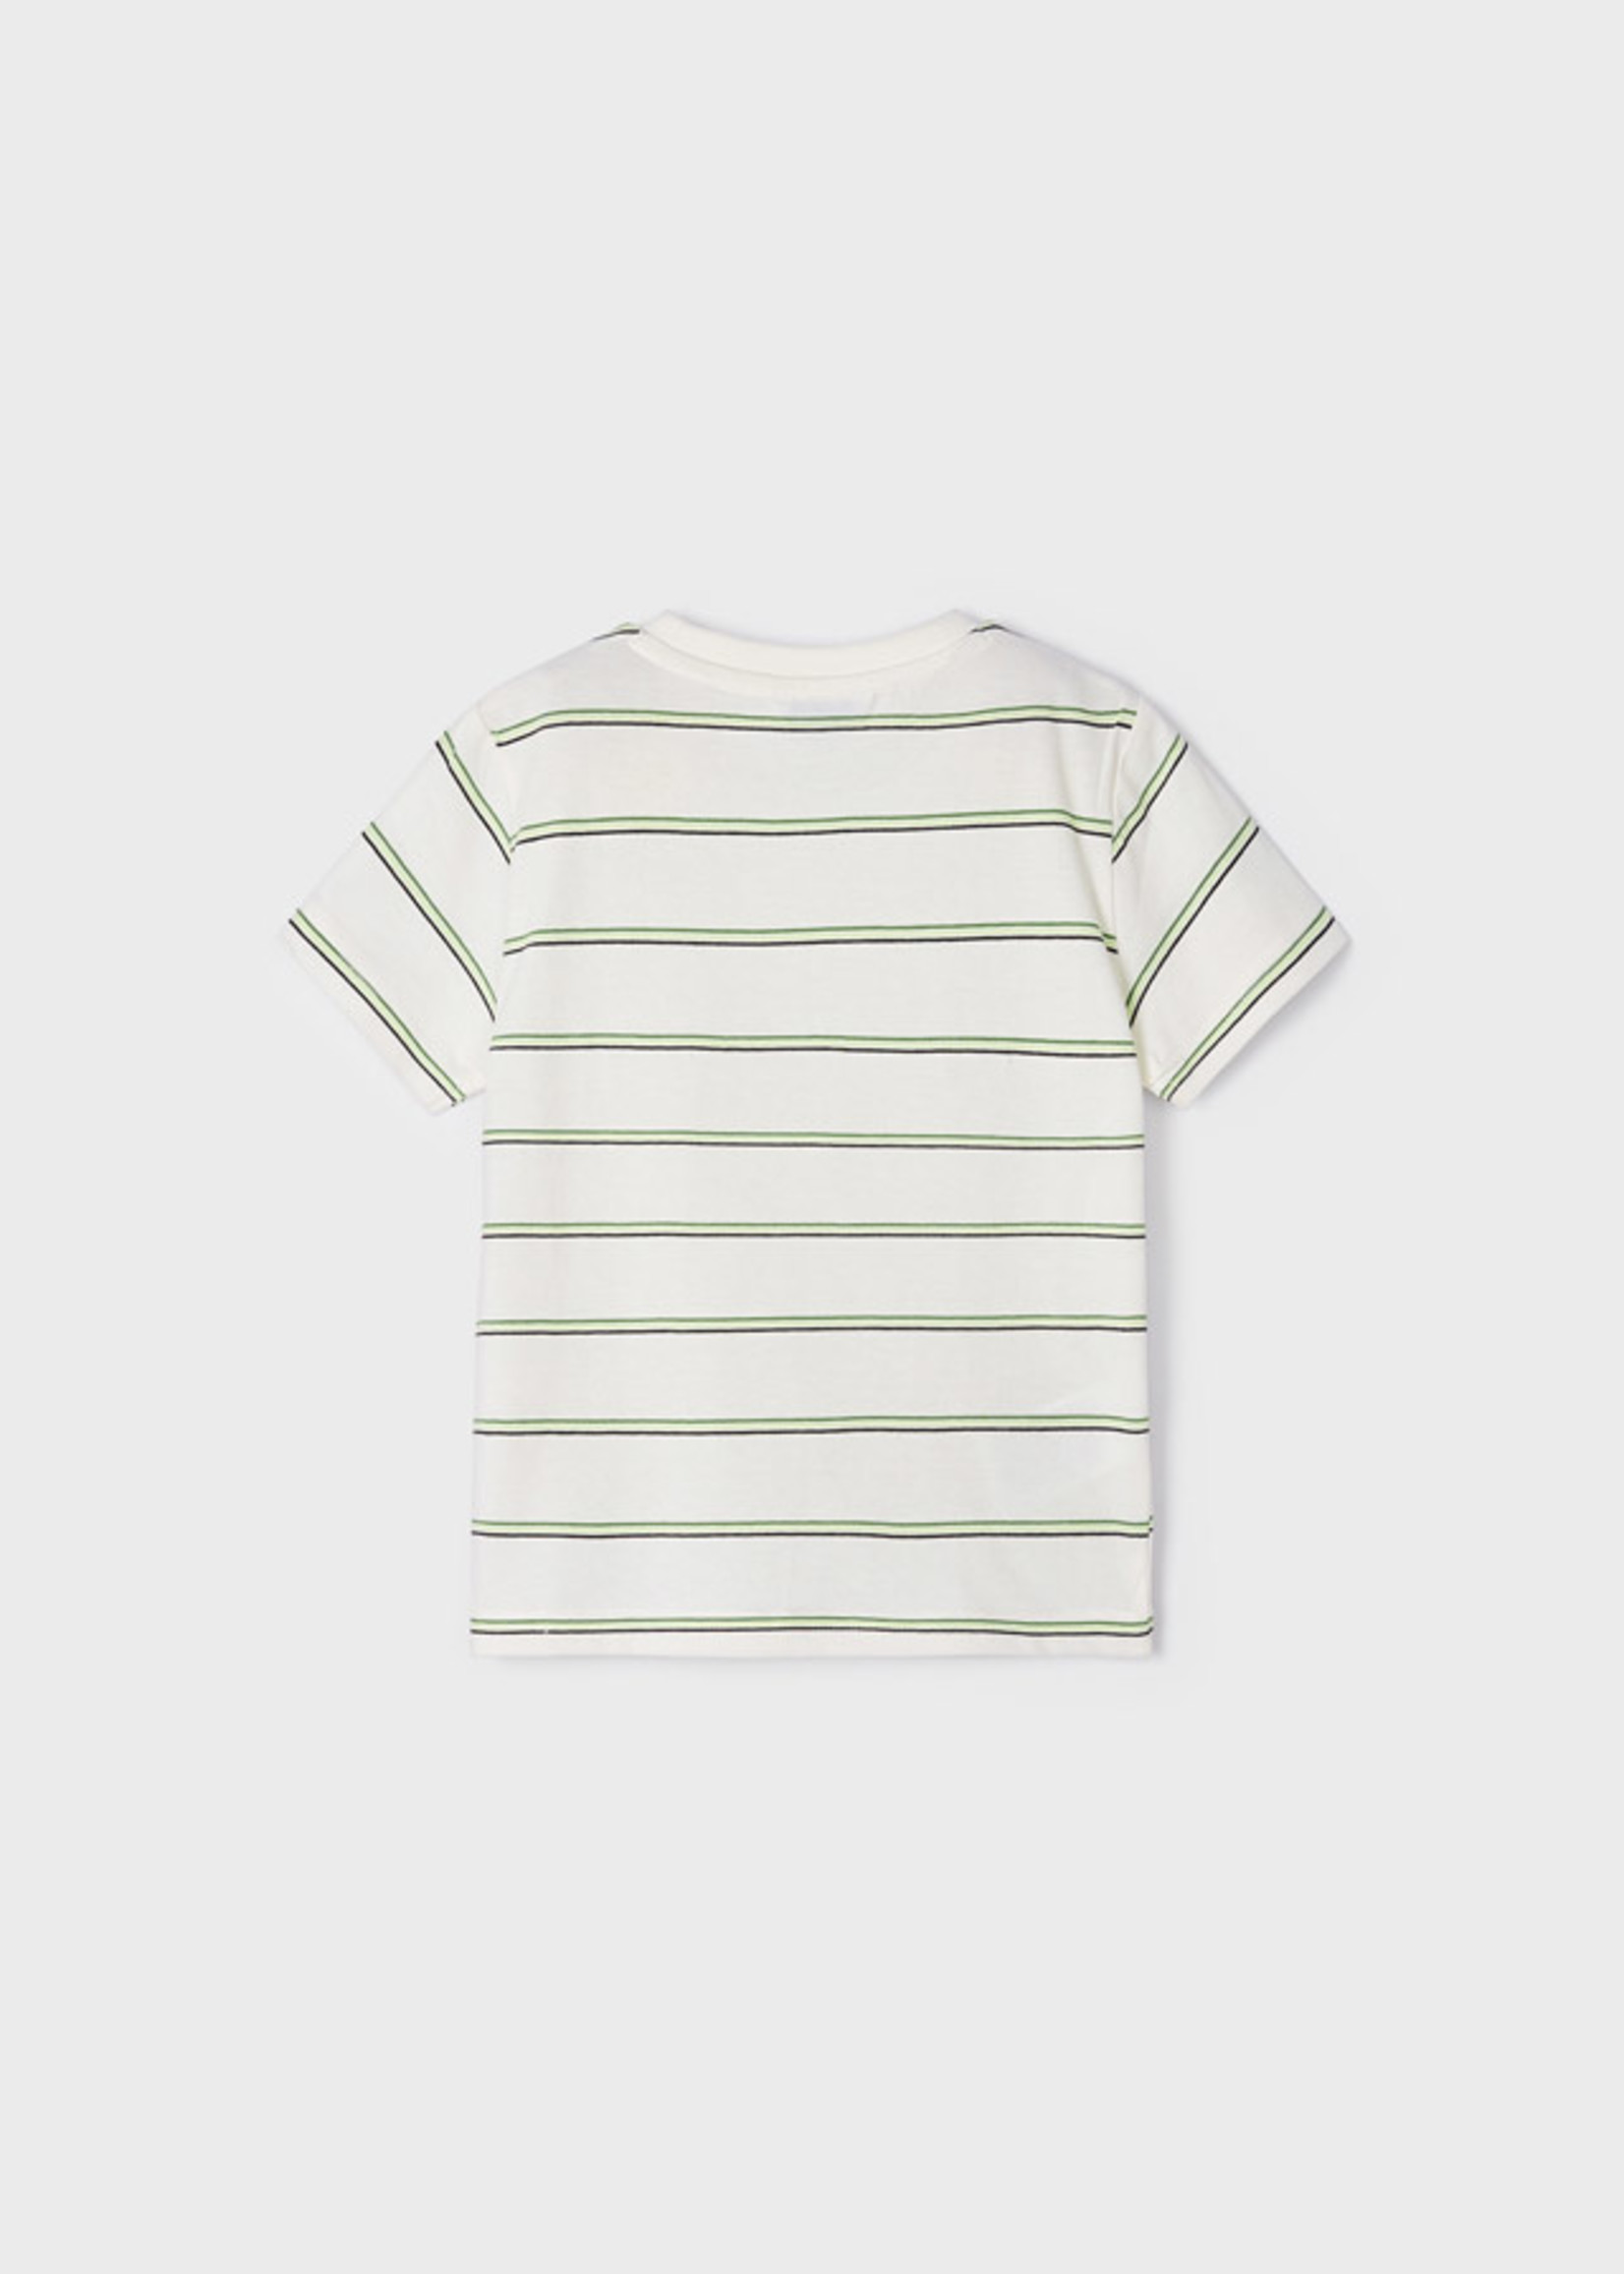 Mayoral 810 Mini Boy             S/s striped t-shirt           Celery